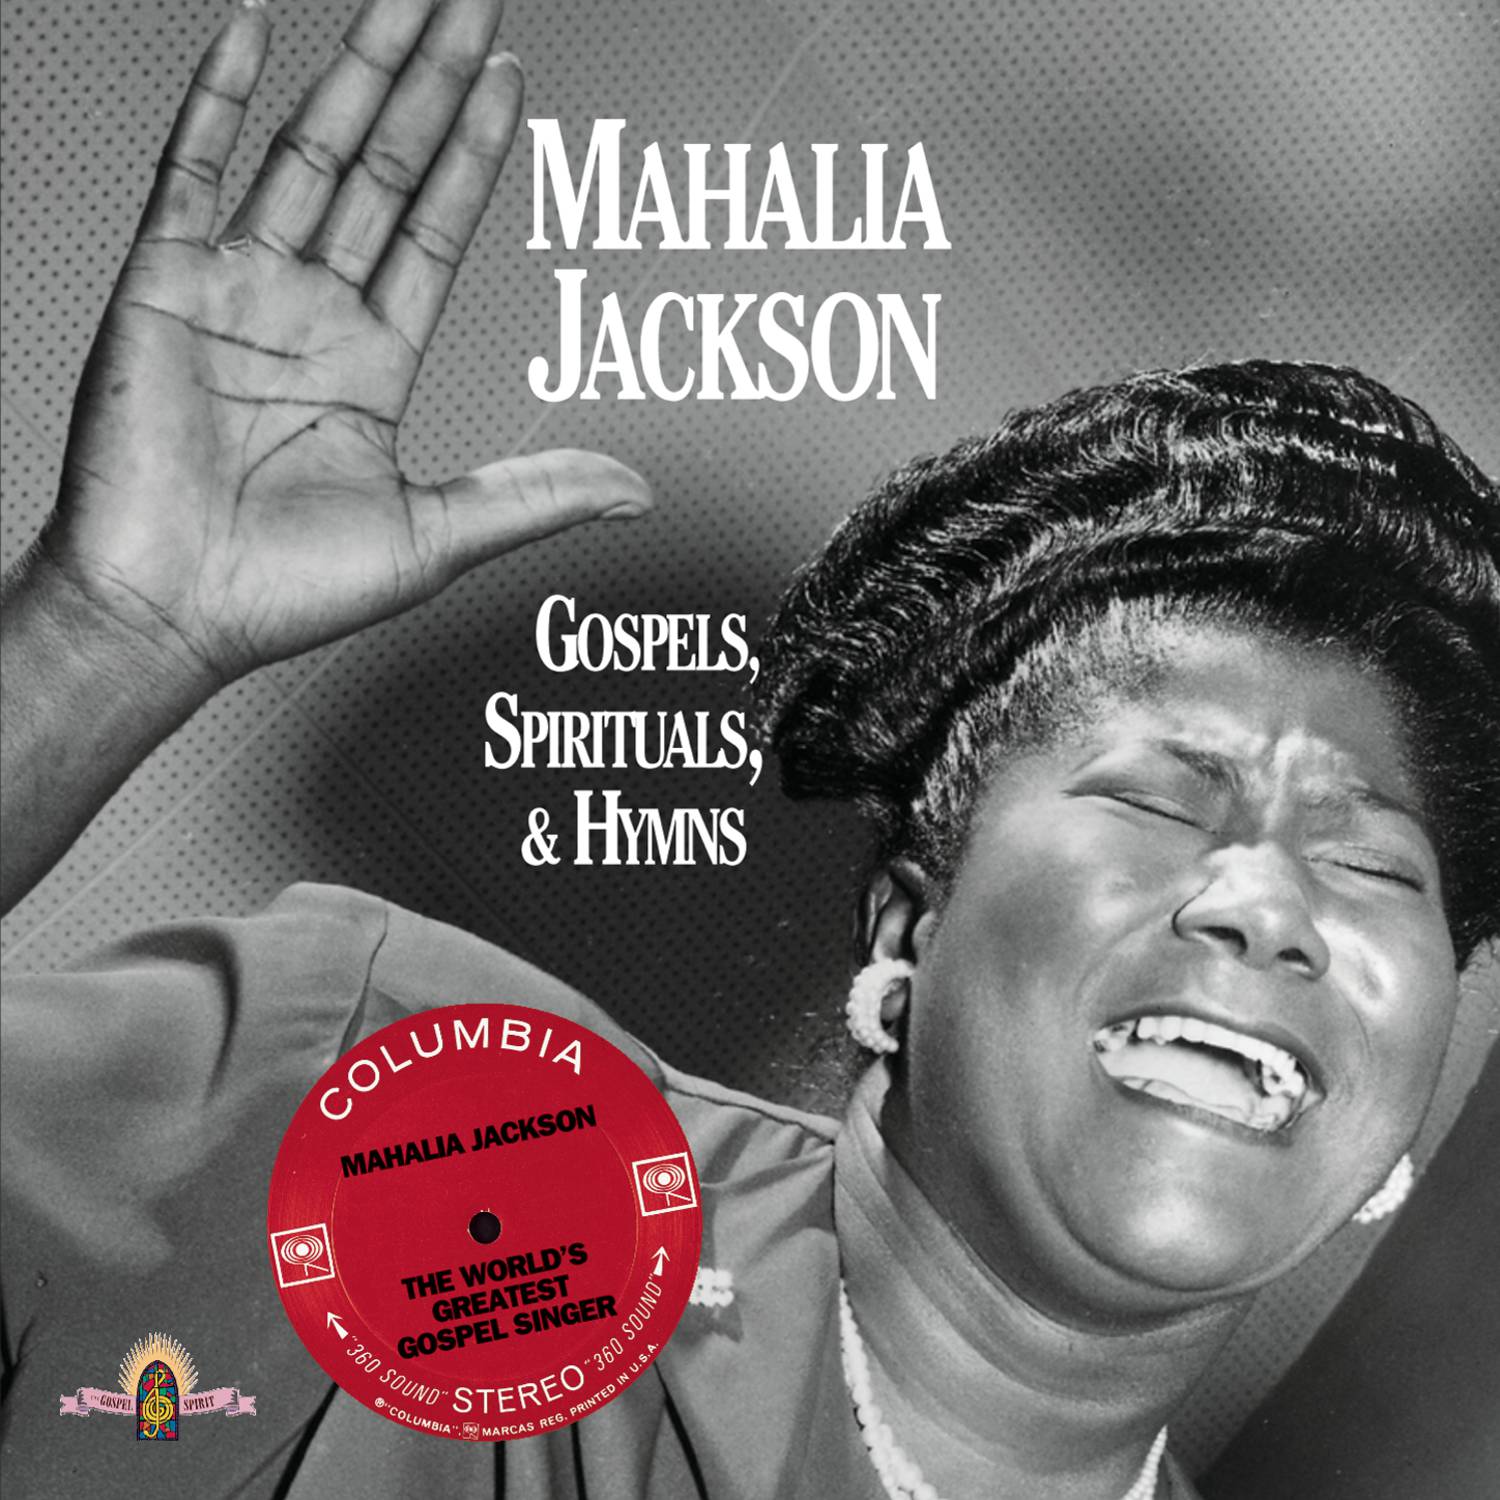 Mahalia Jackson - Gospels, Spirituals & Hymns (1991/2015) [AcousticSounds FLAC 24bit/44,1kHz]